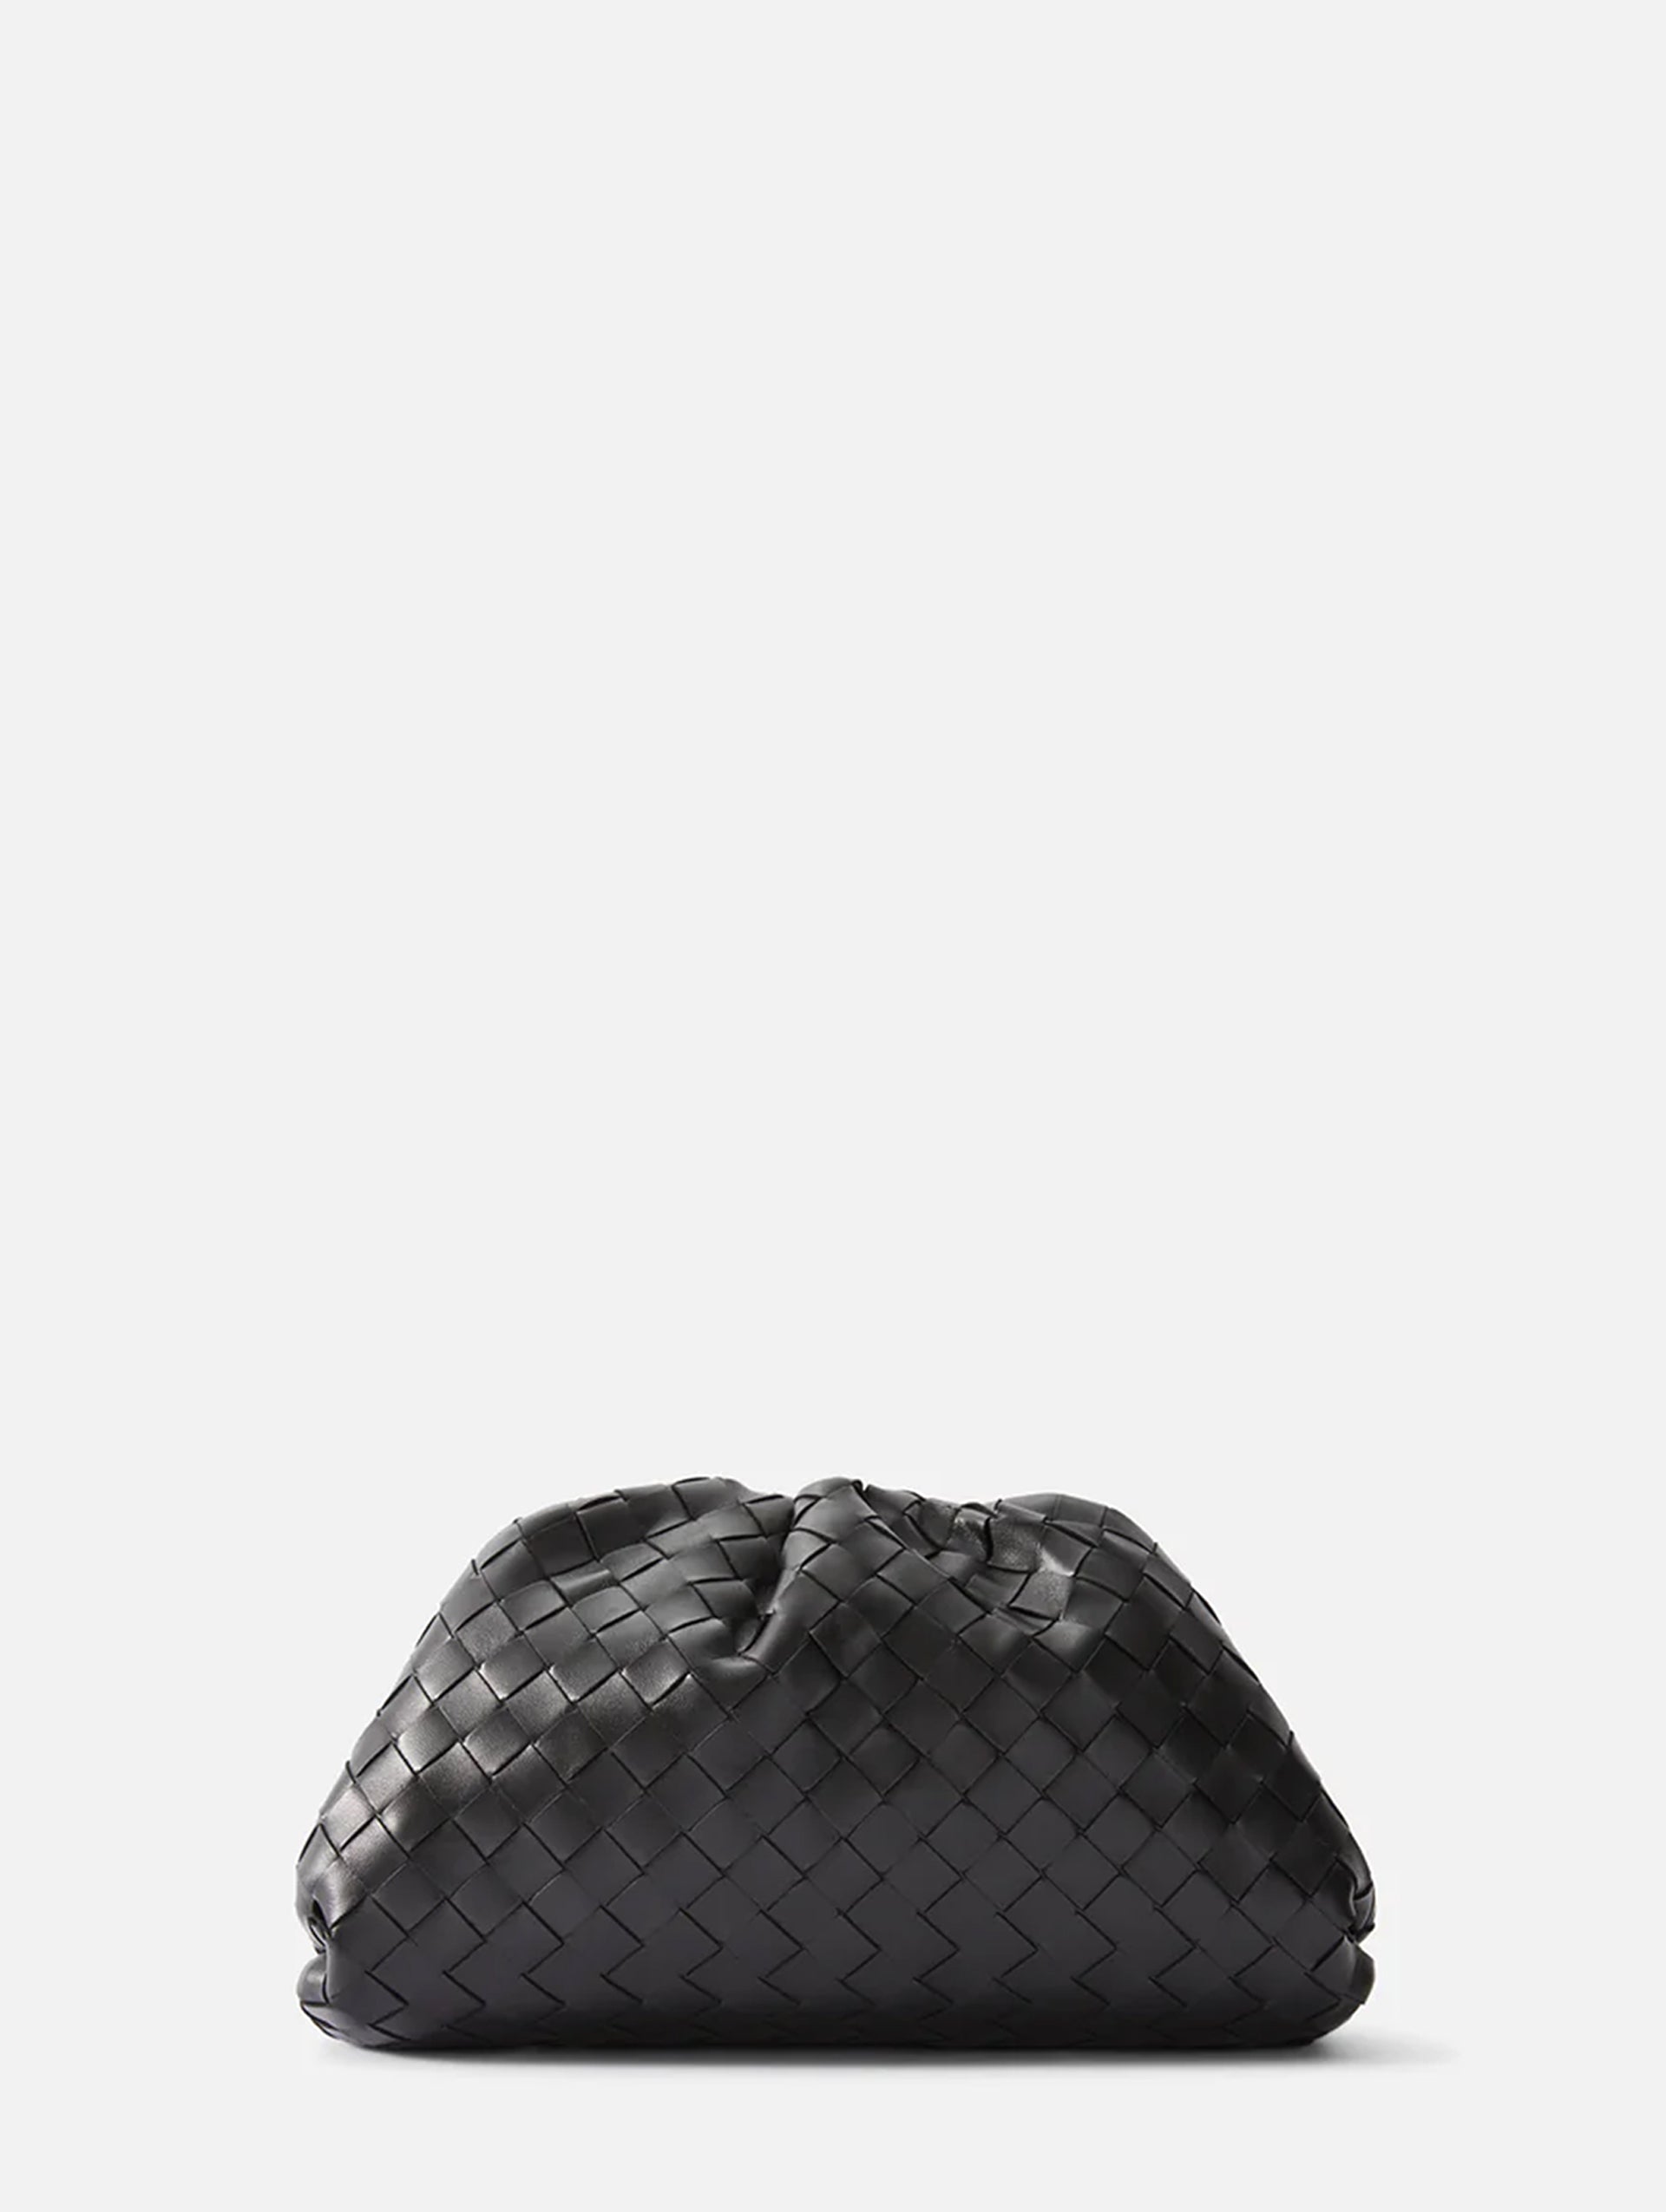 Bottega Veneta The Mini Pouch Intrecciato bag in black